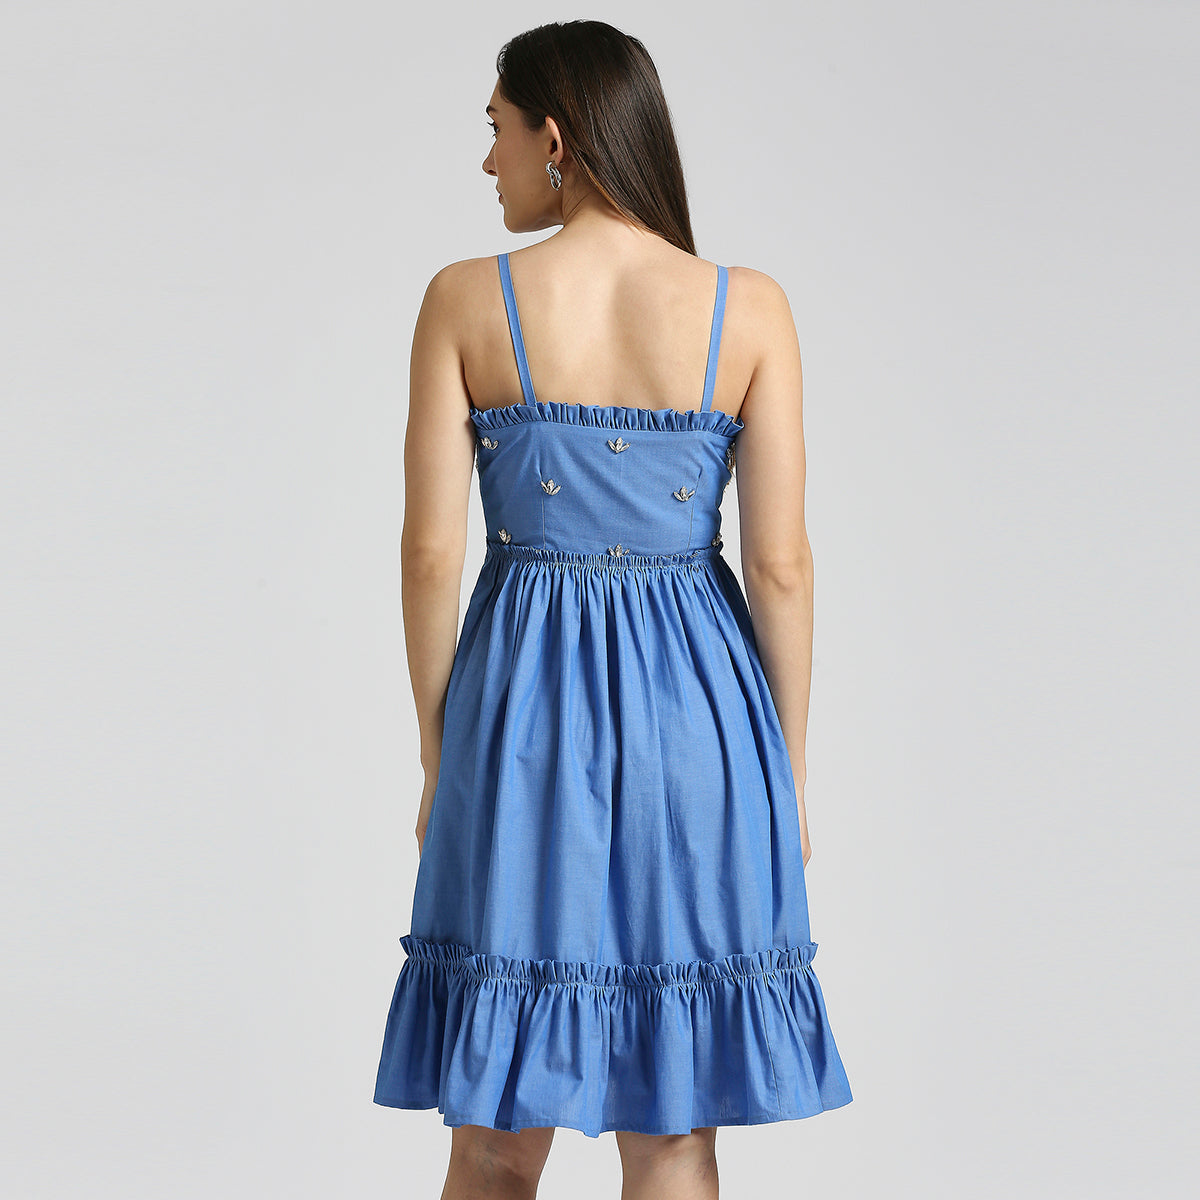 Blue Cambric Embellished Dress